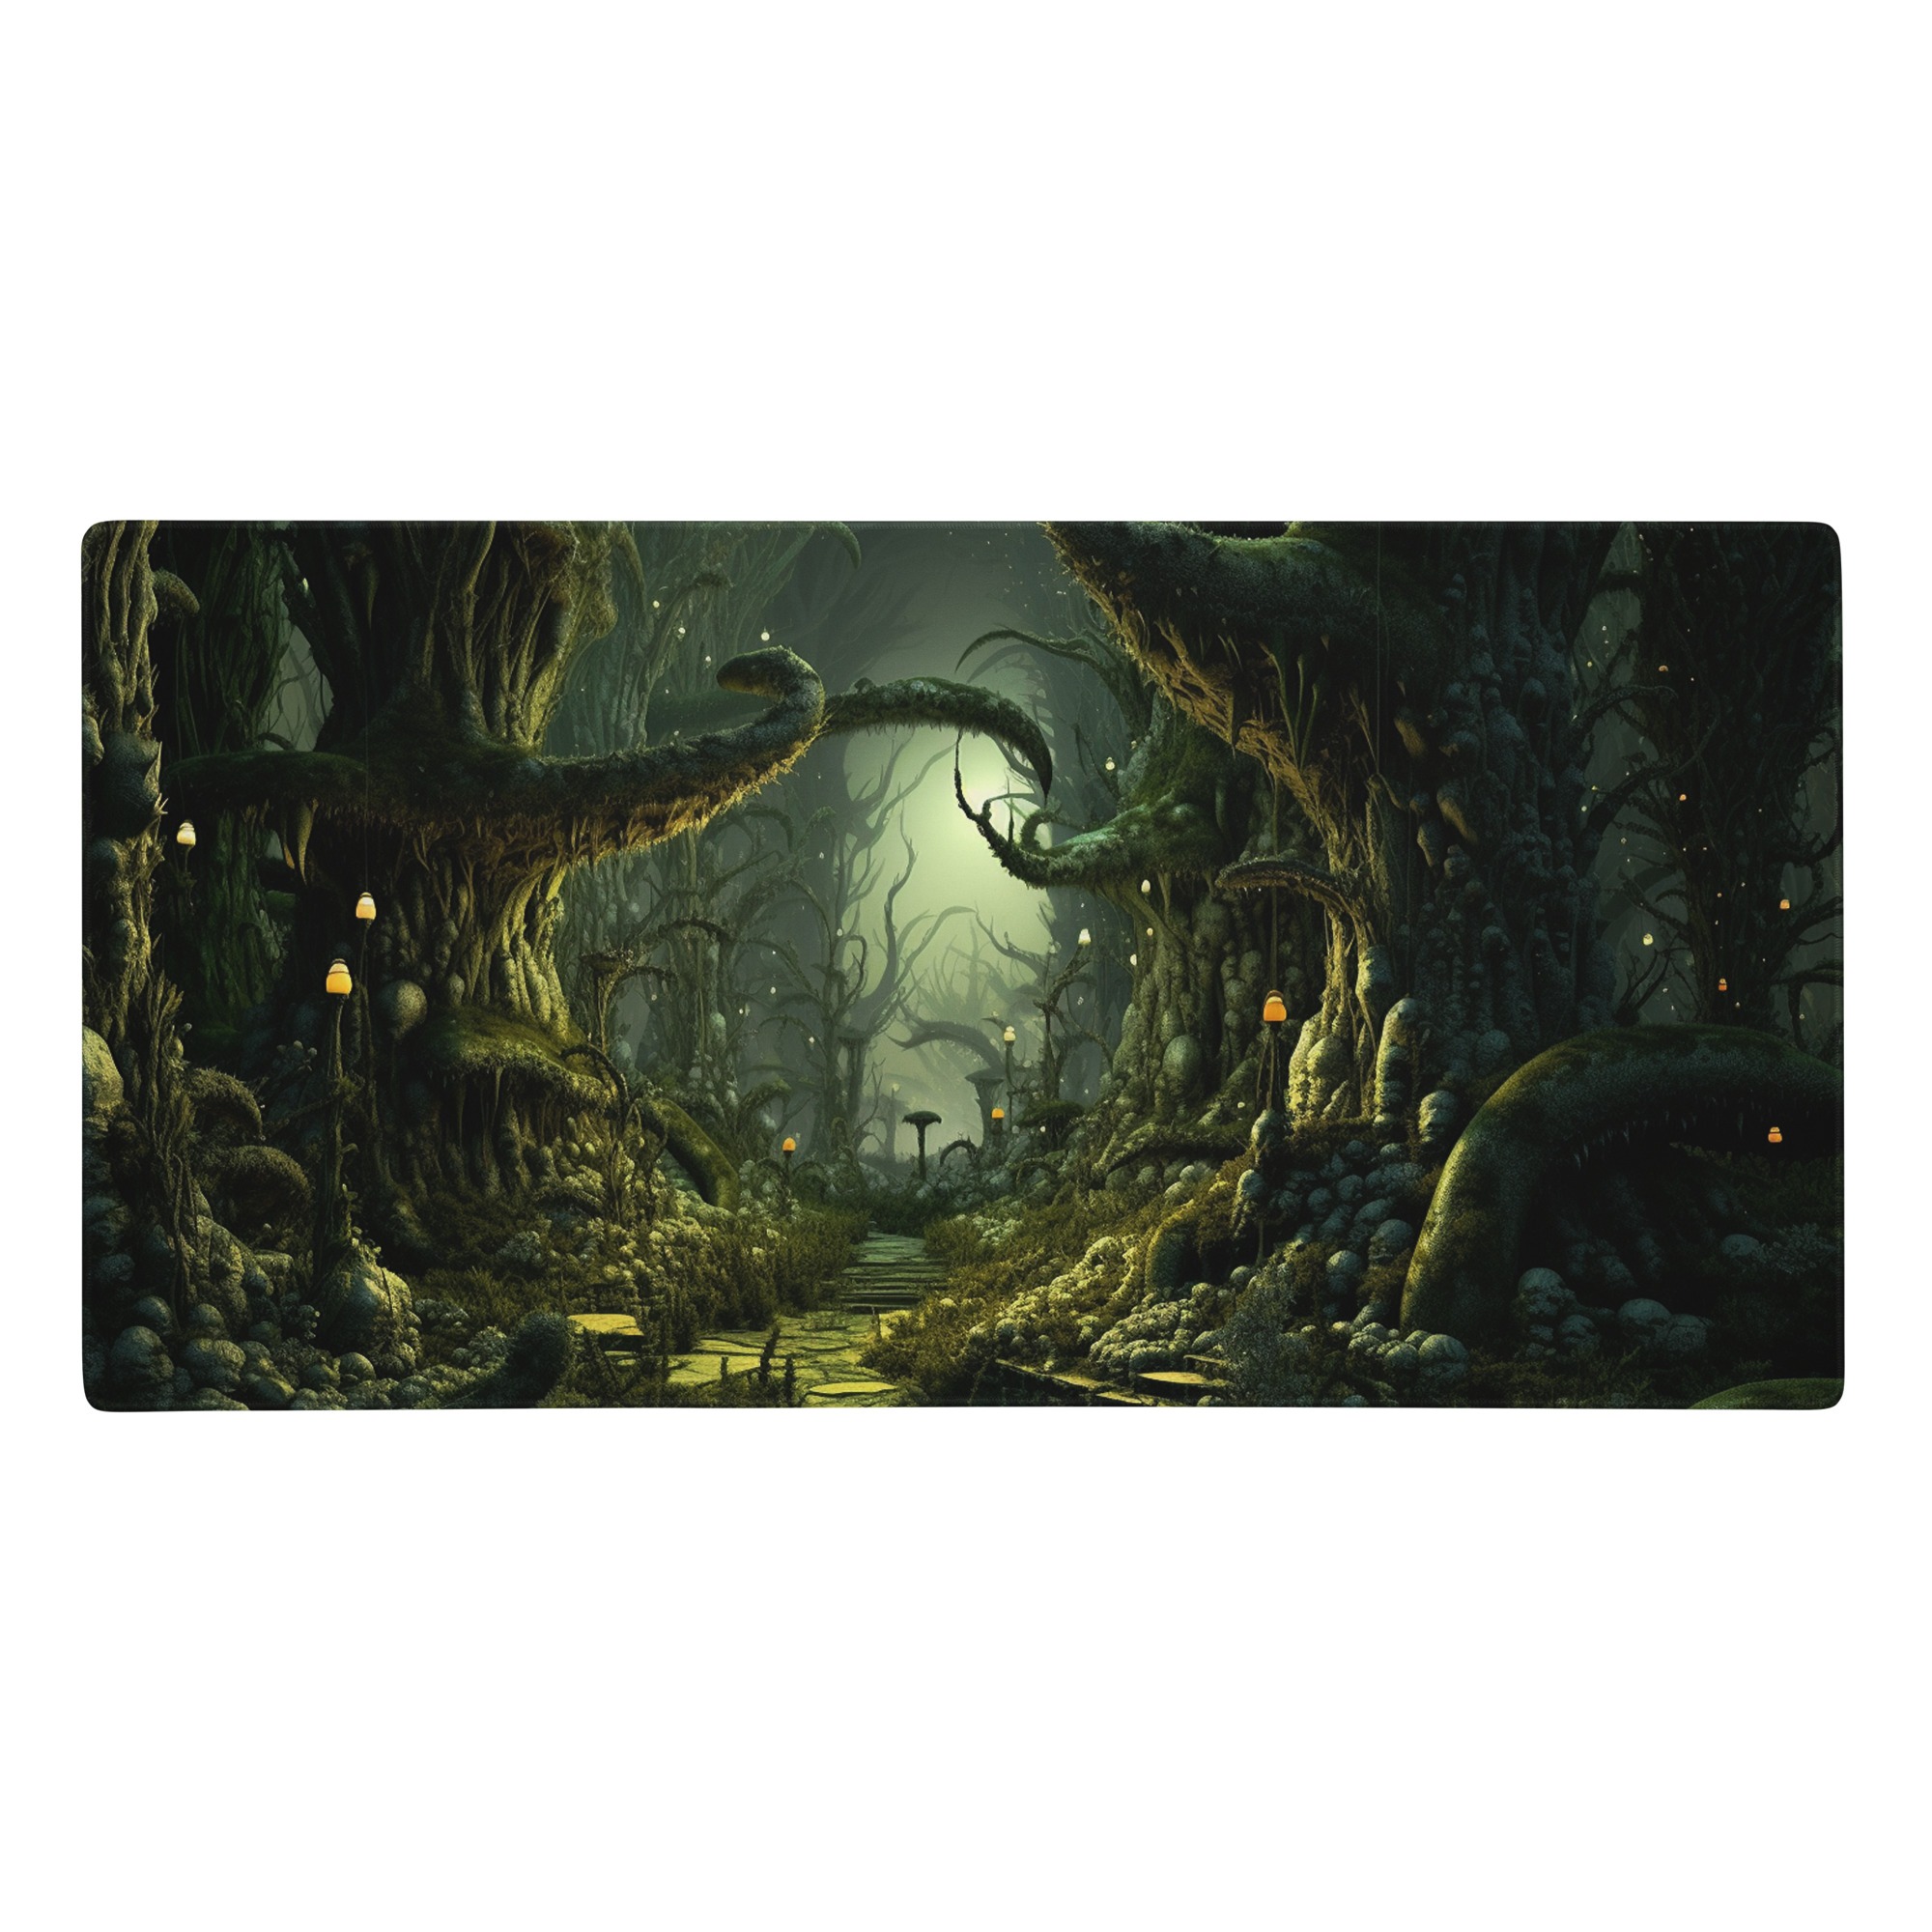 Mossy Veil Passage | Fantasy Artwork | Gaming mouse pad